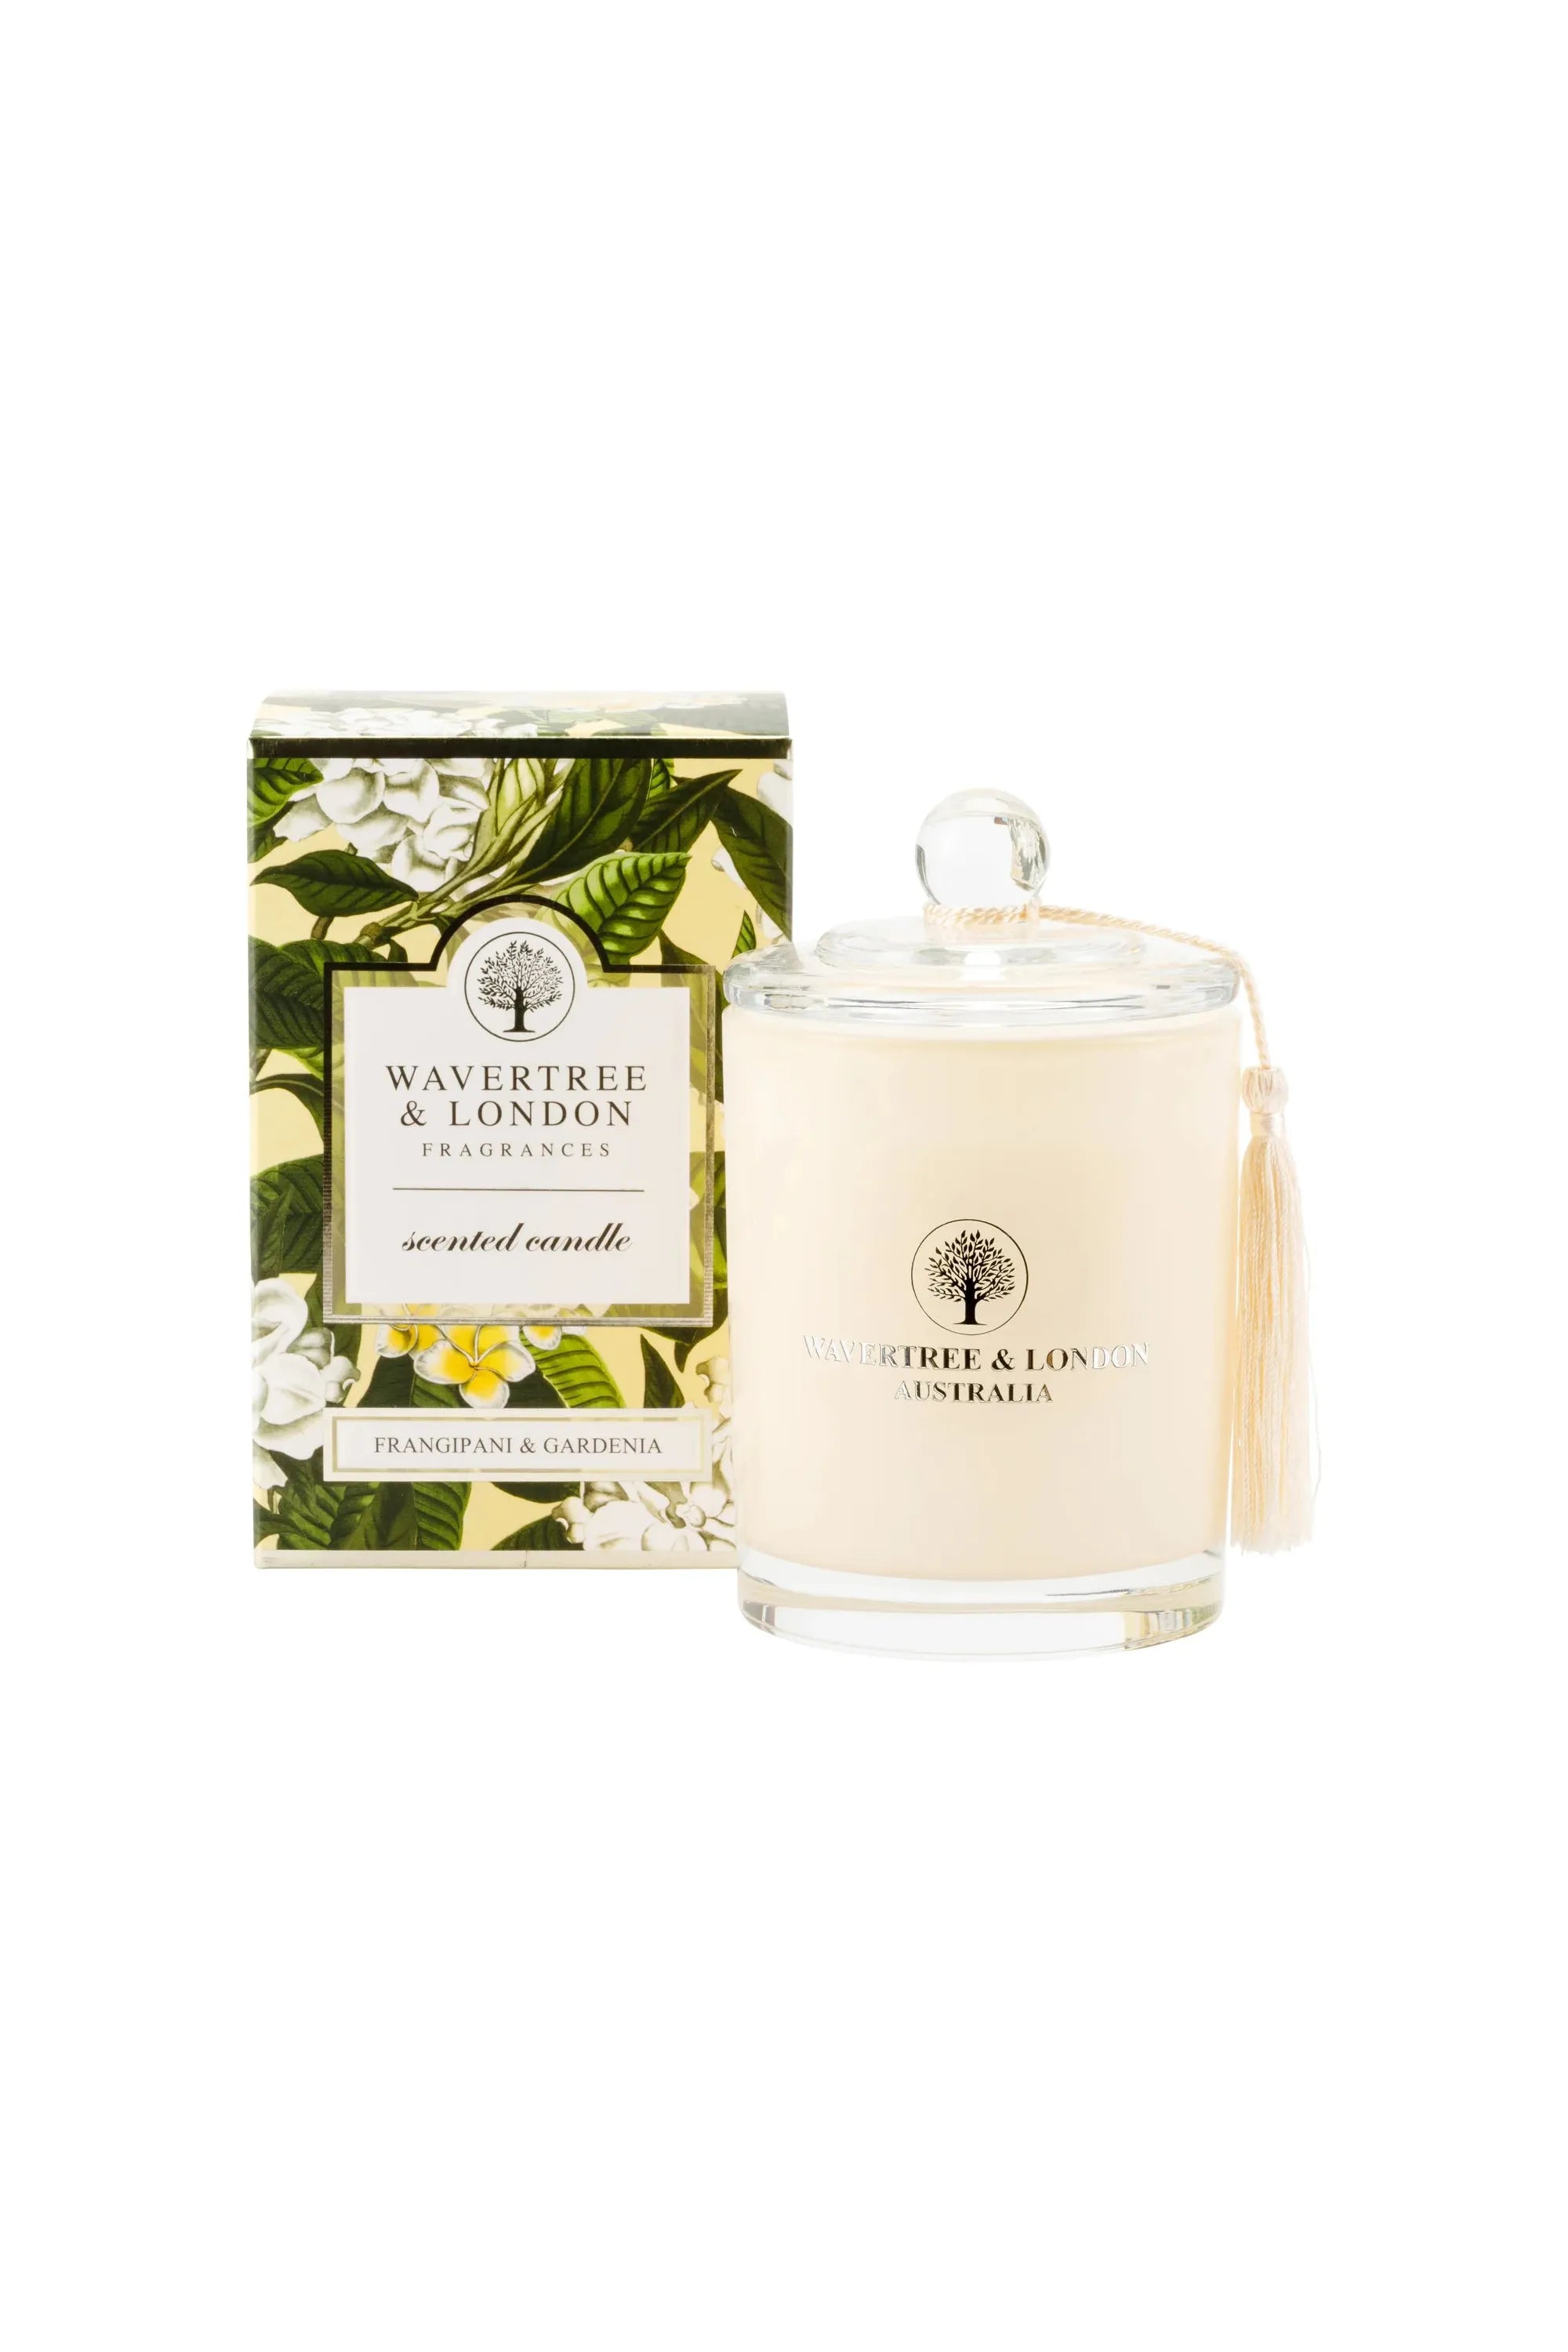 Wavertree & London Candle  - Frangipani & Gardenia